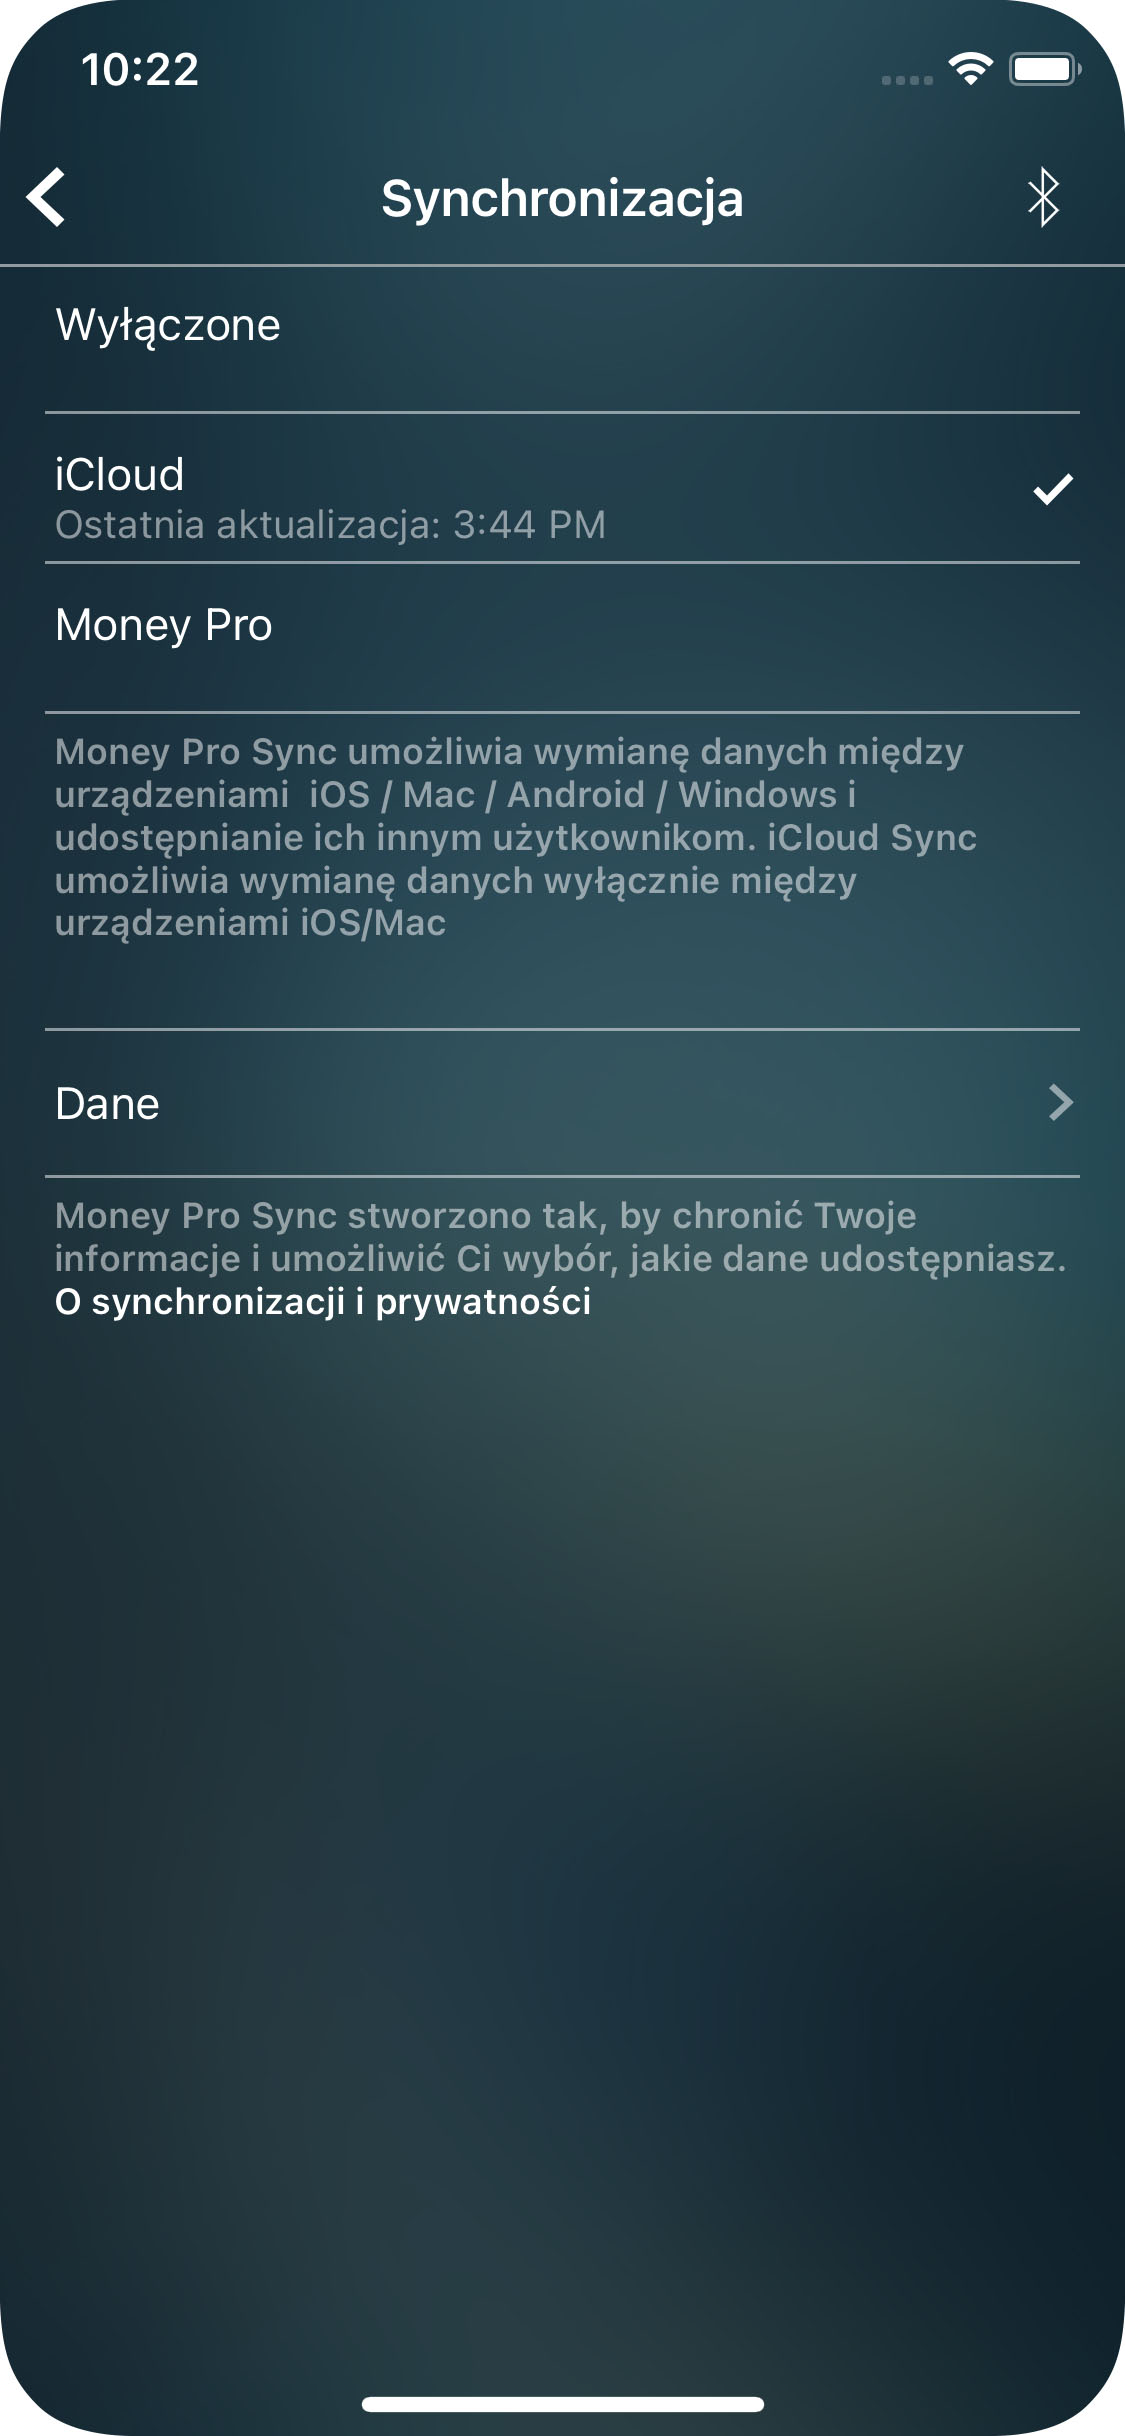 Money Pro - Synchronizacja iCloud (iOS, Mac) - iPhone